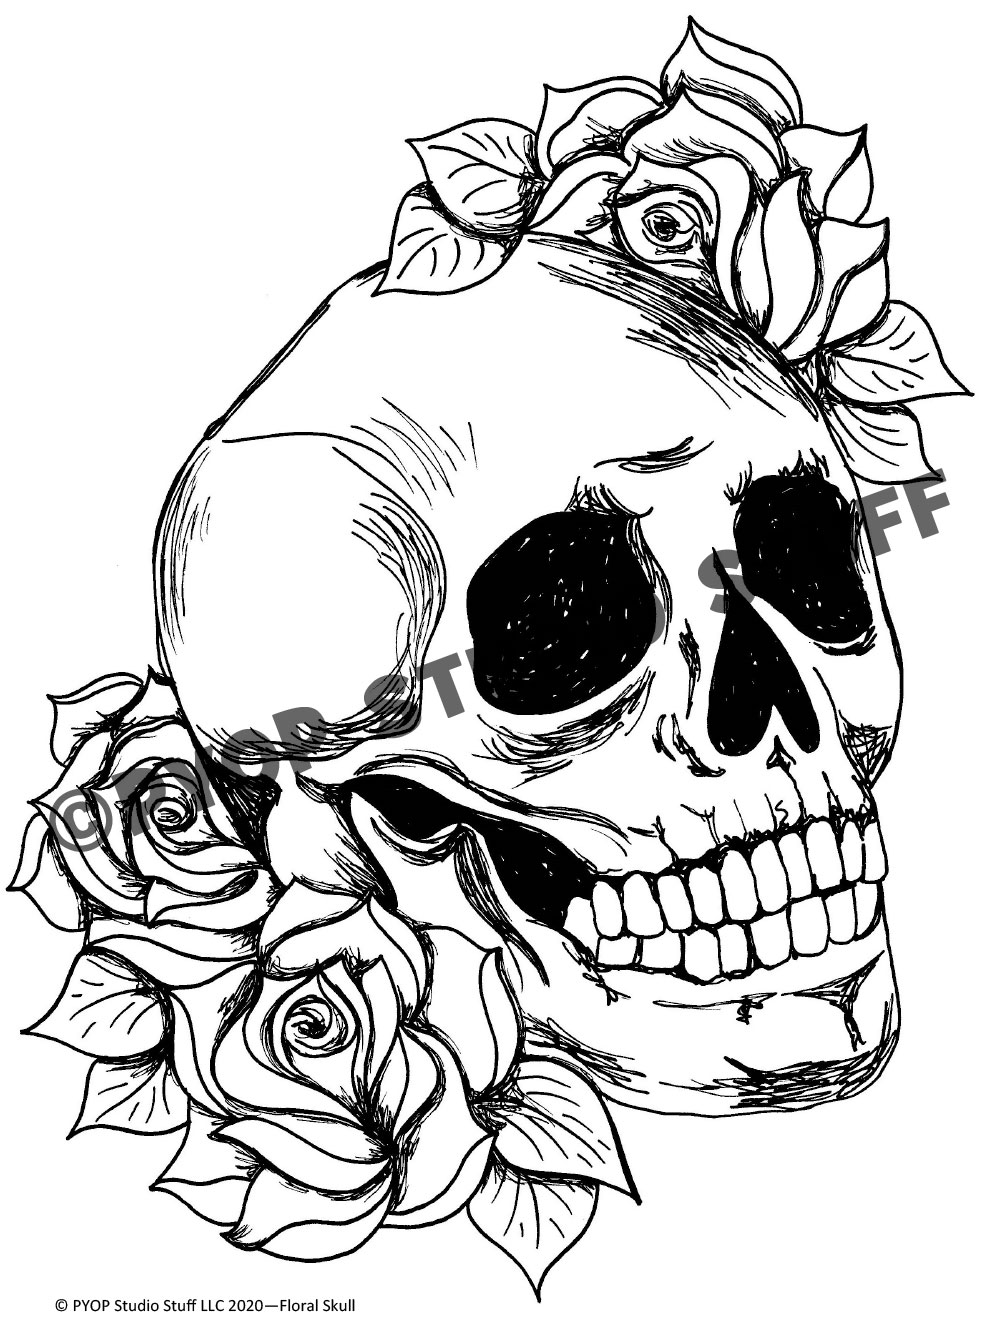 https://pyopstudiostuff.com/wp-content/uploads/2020/09/Floral-Skull-Cover.jpg